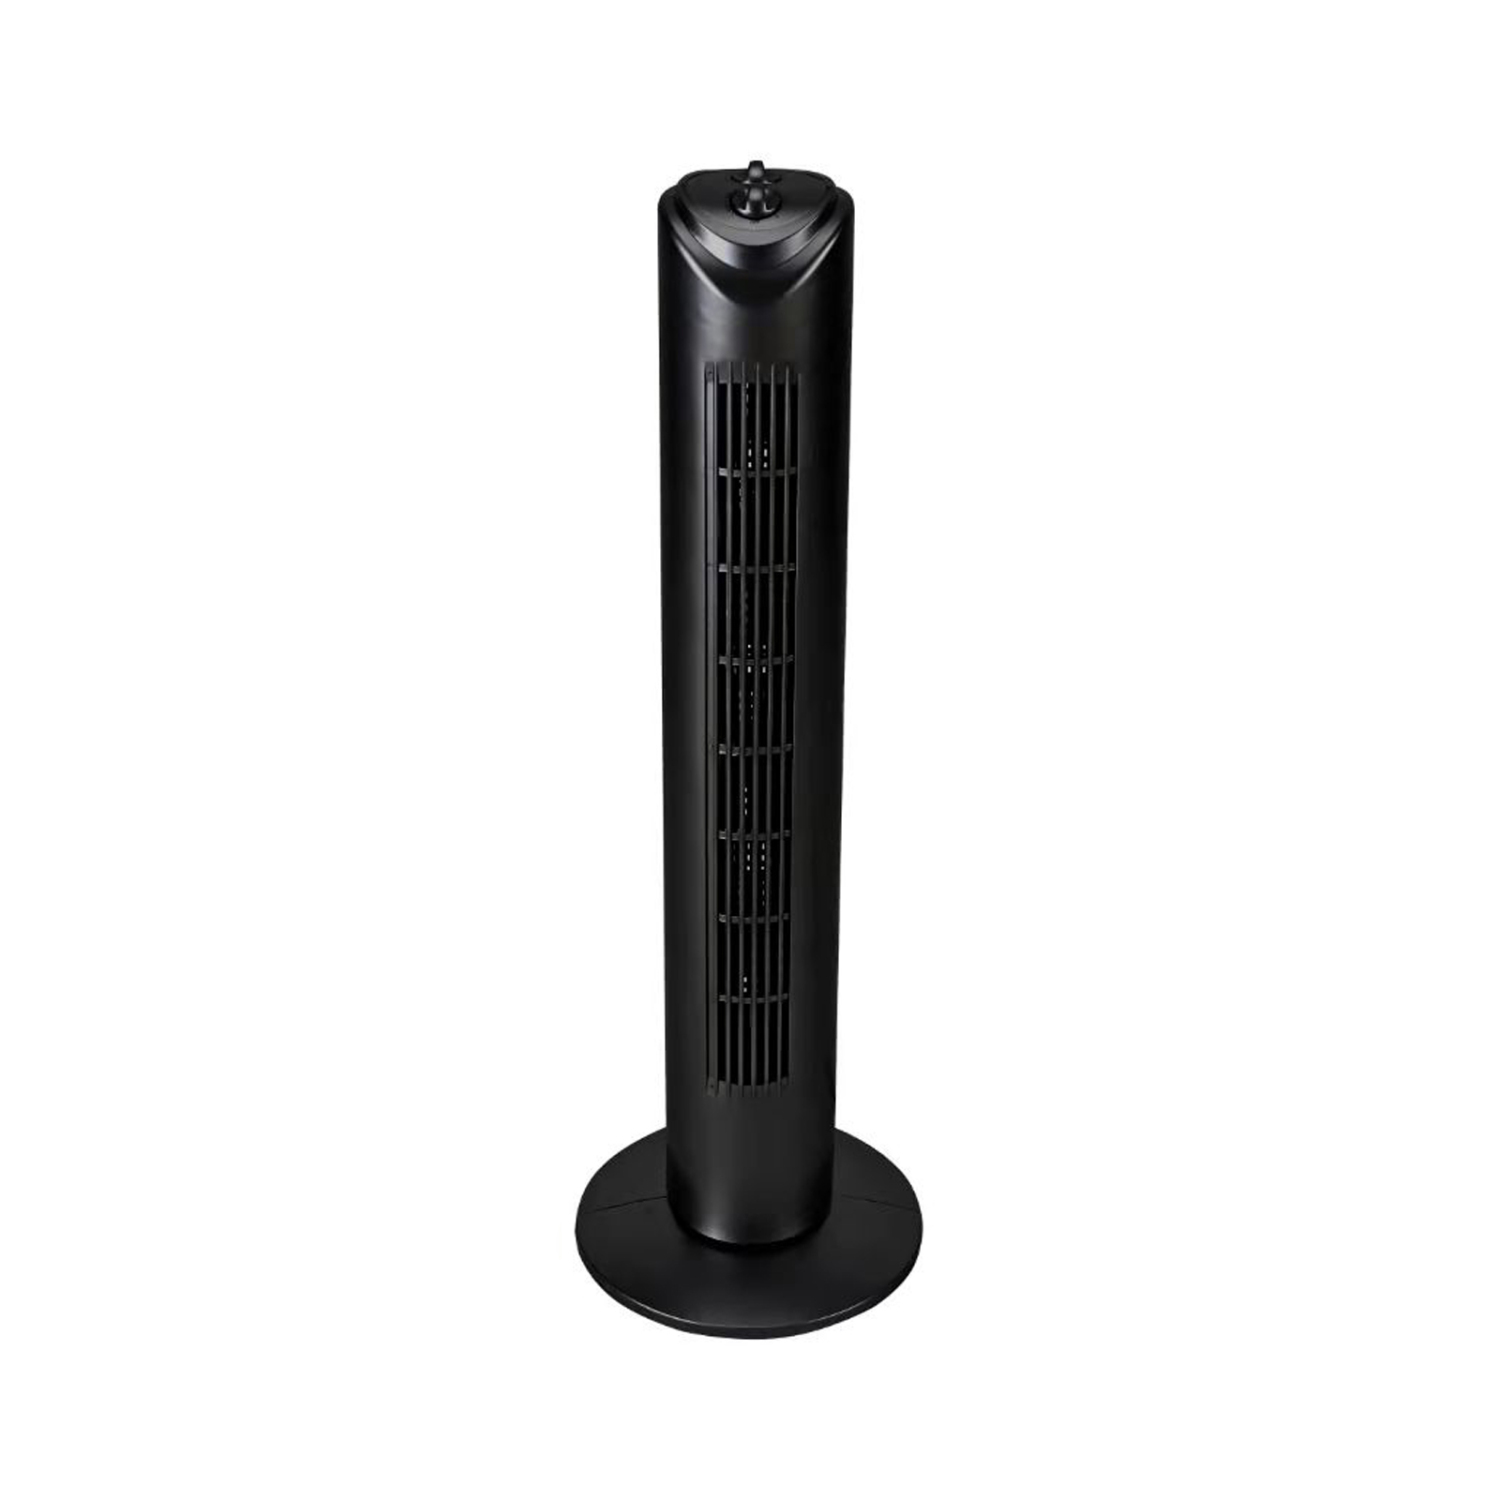 Aigostar Benson - Ventilador de Torre, 3 Velocidades, Oscilación de 85º, Silencioso, Temporizador 120 min, 82 cm de Alto, Diseño Compacto, Fácil Instalación. Ventilador de Pie Portátil 45W